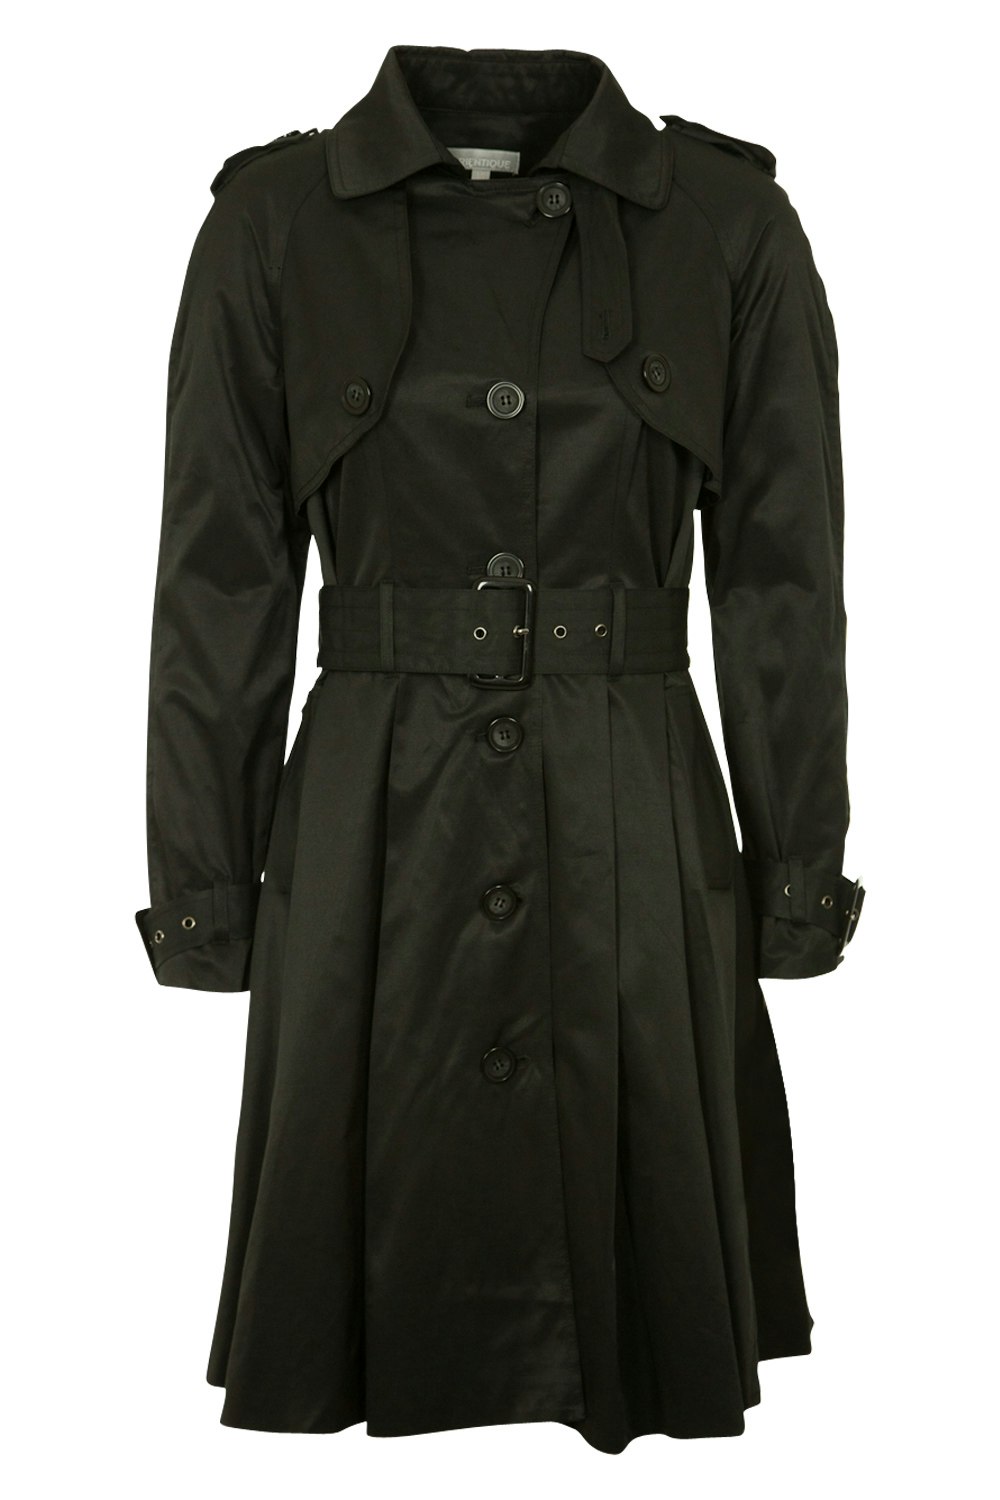 Orientique Button And Belt Coat - Womens Trench Coats - at Birdsnest ...